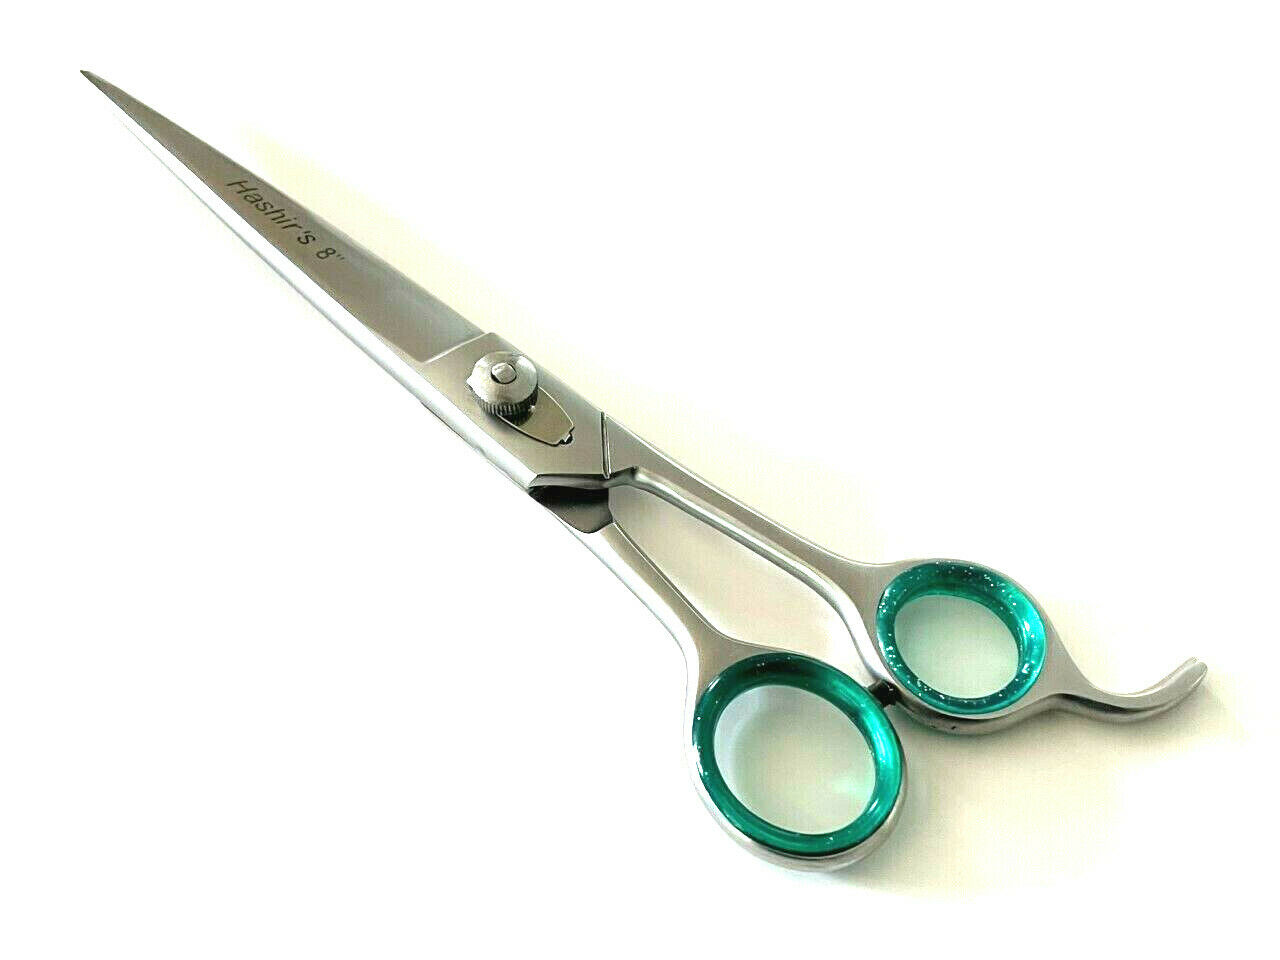 Professional HASHIR Professional 8 Big Super Sharp Shears Scissors  Stainless